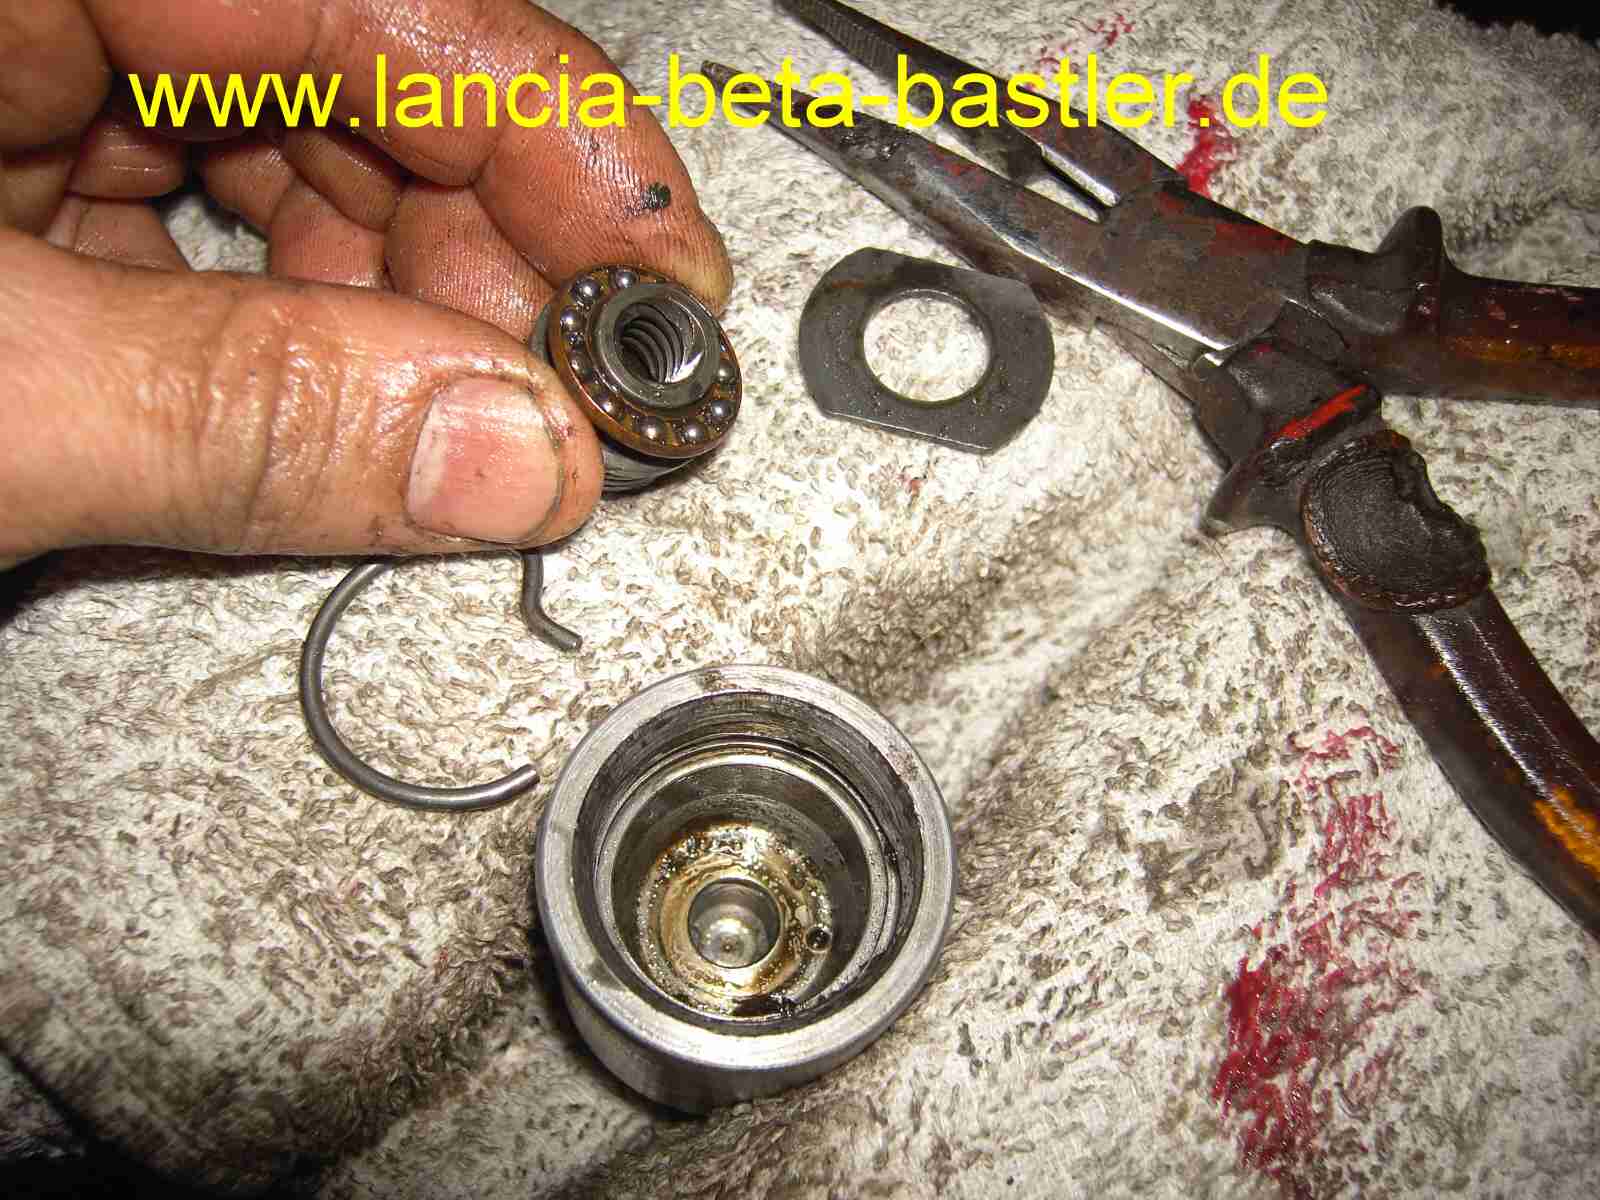 http://www.lancia-beta-bastler.de/assets/images/Bremskolben_Mutter_umbauen_Lancia_Beta.jpg